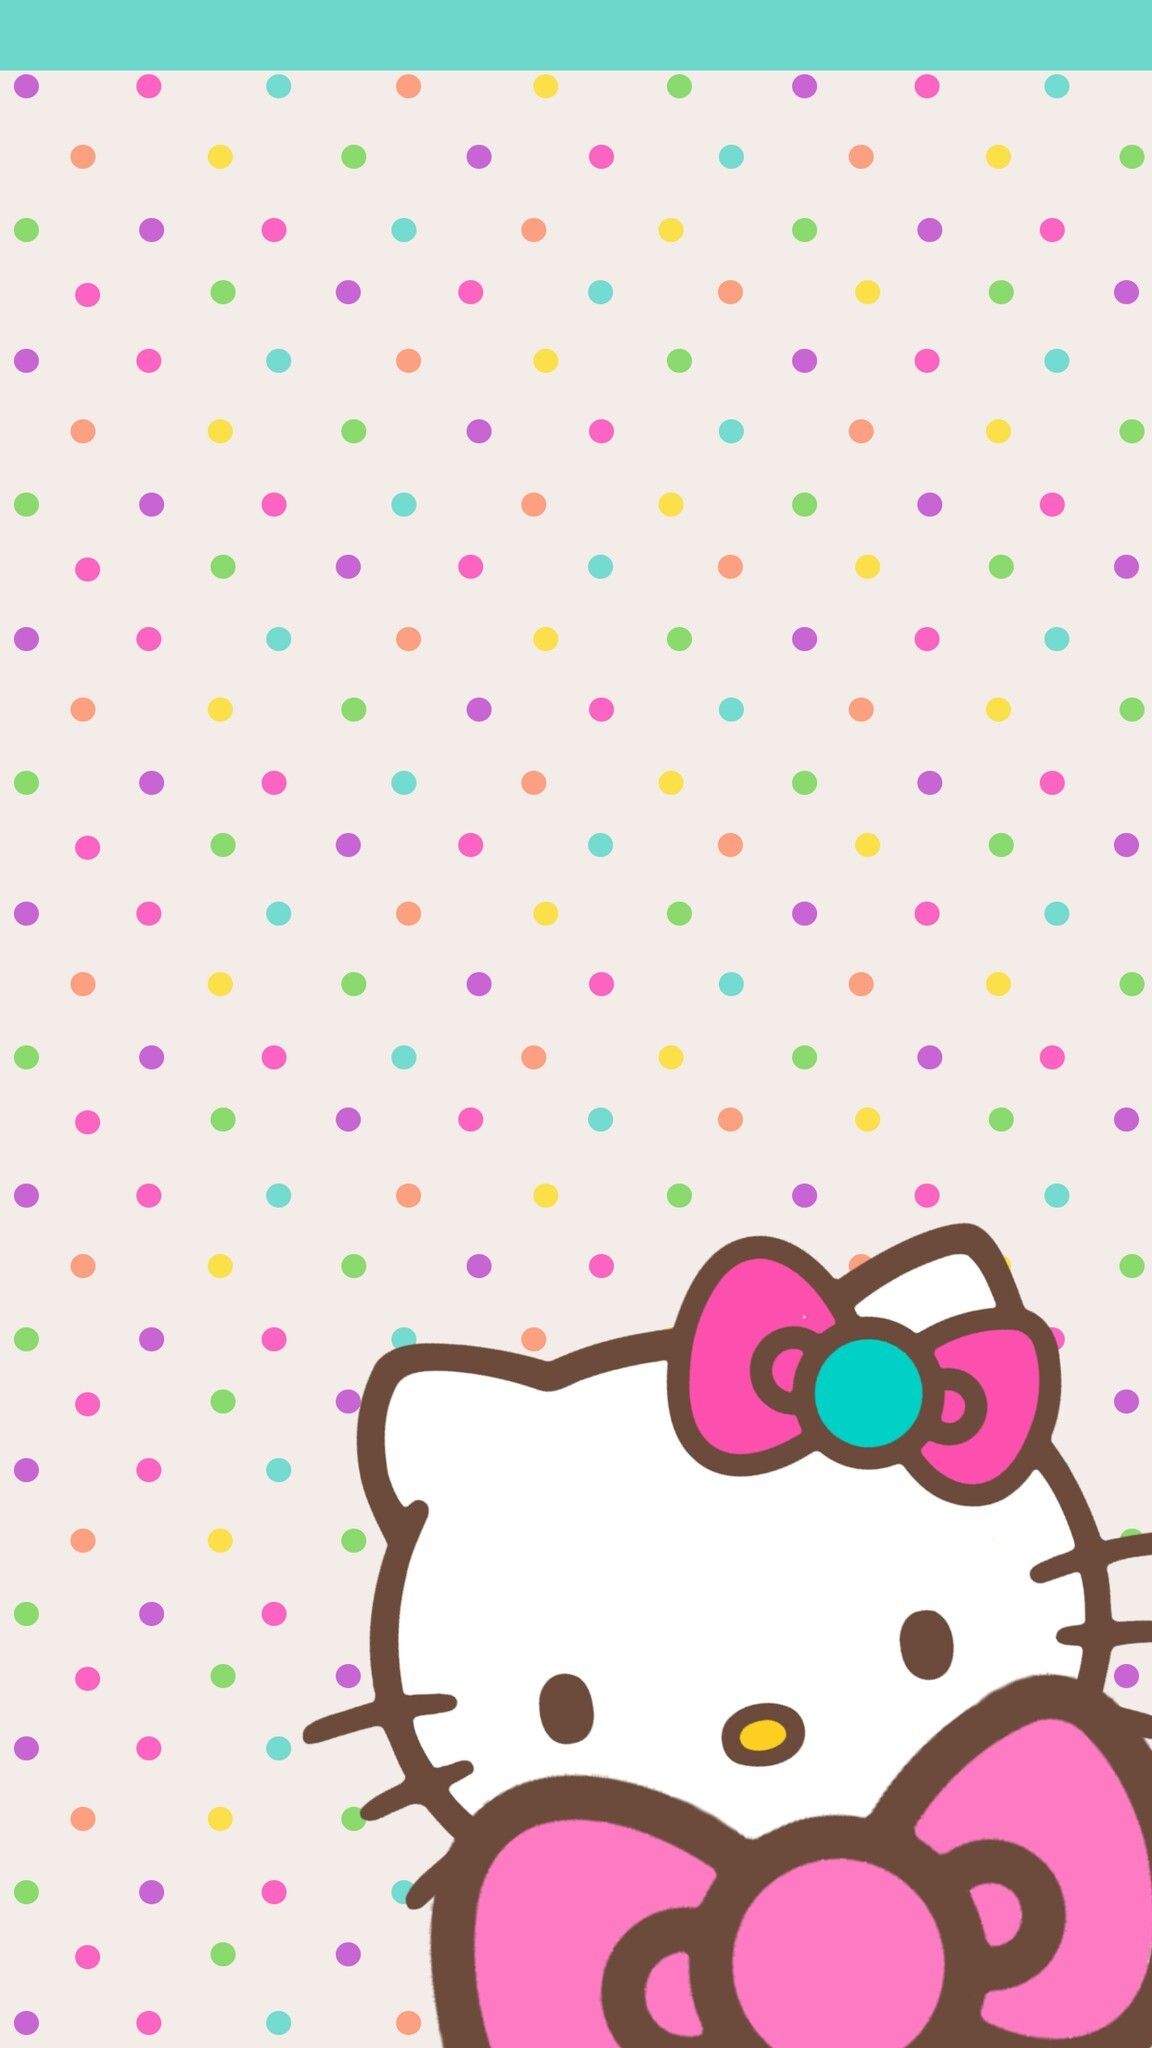 Hello Kitty Phone Wallpaper